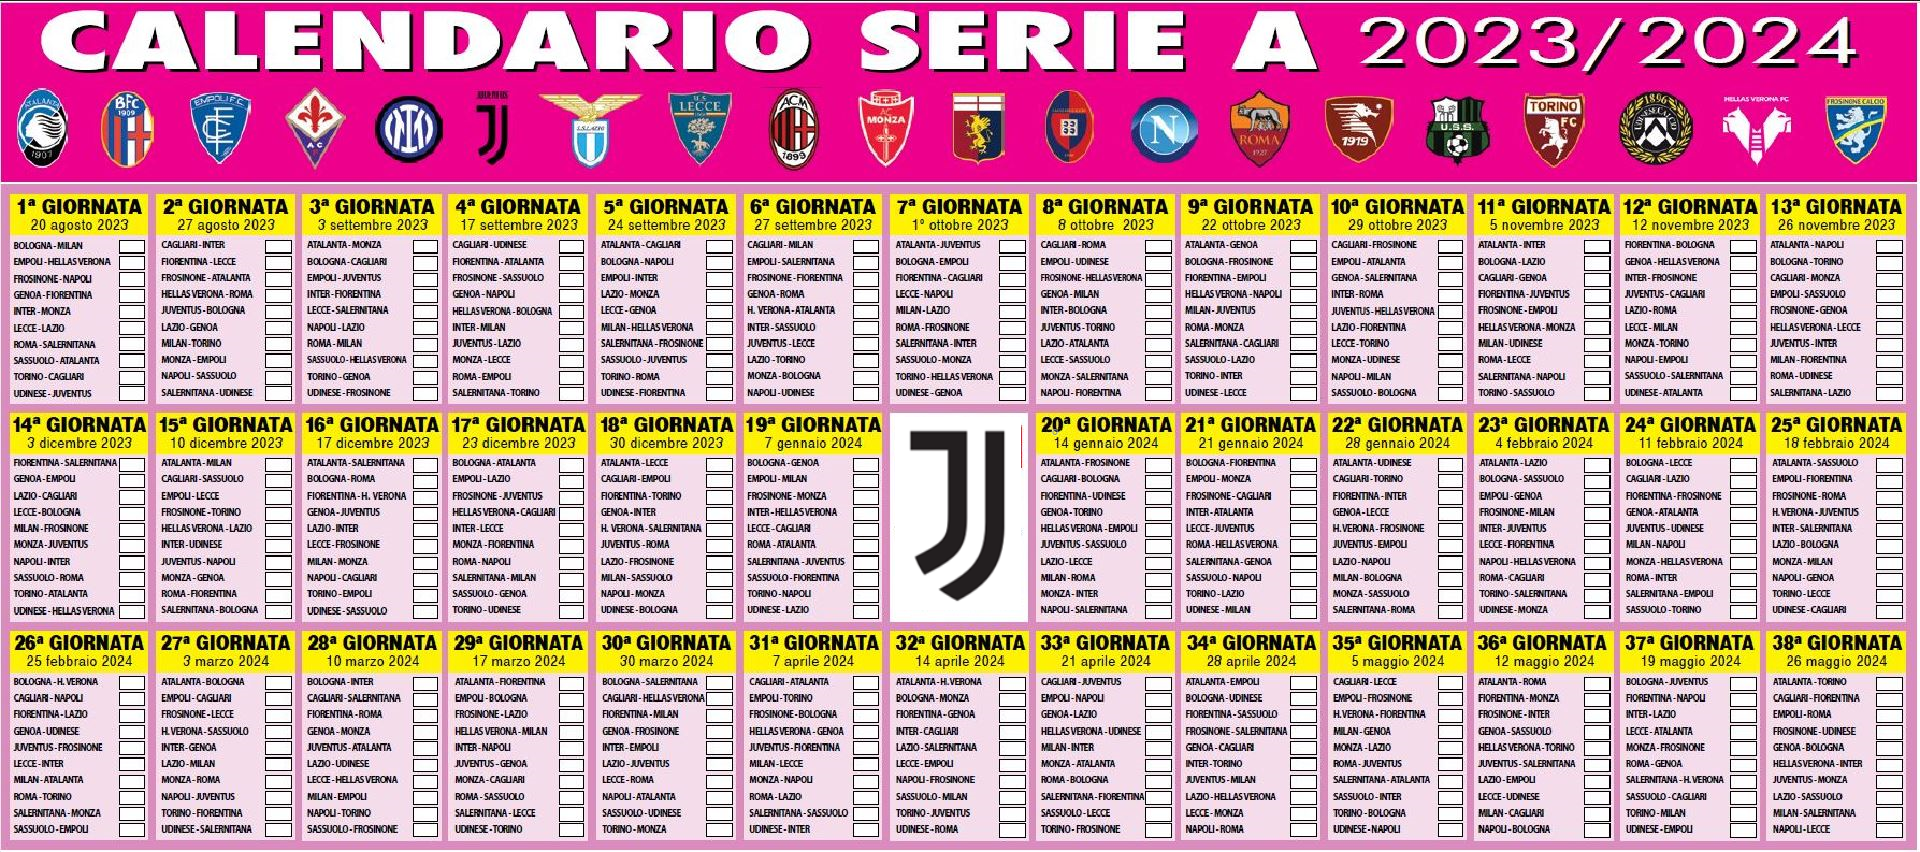 2023-2024 Juventus Schedule